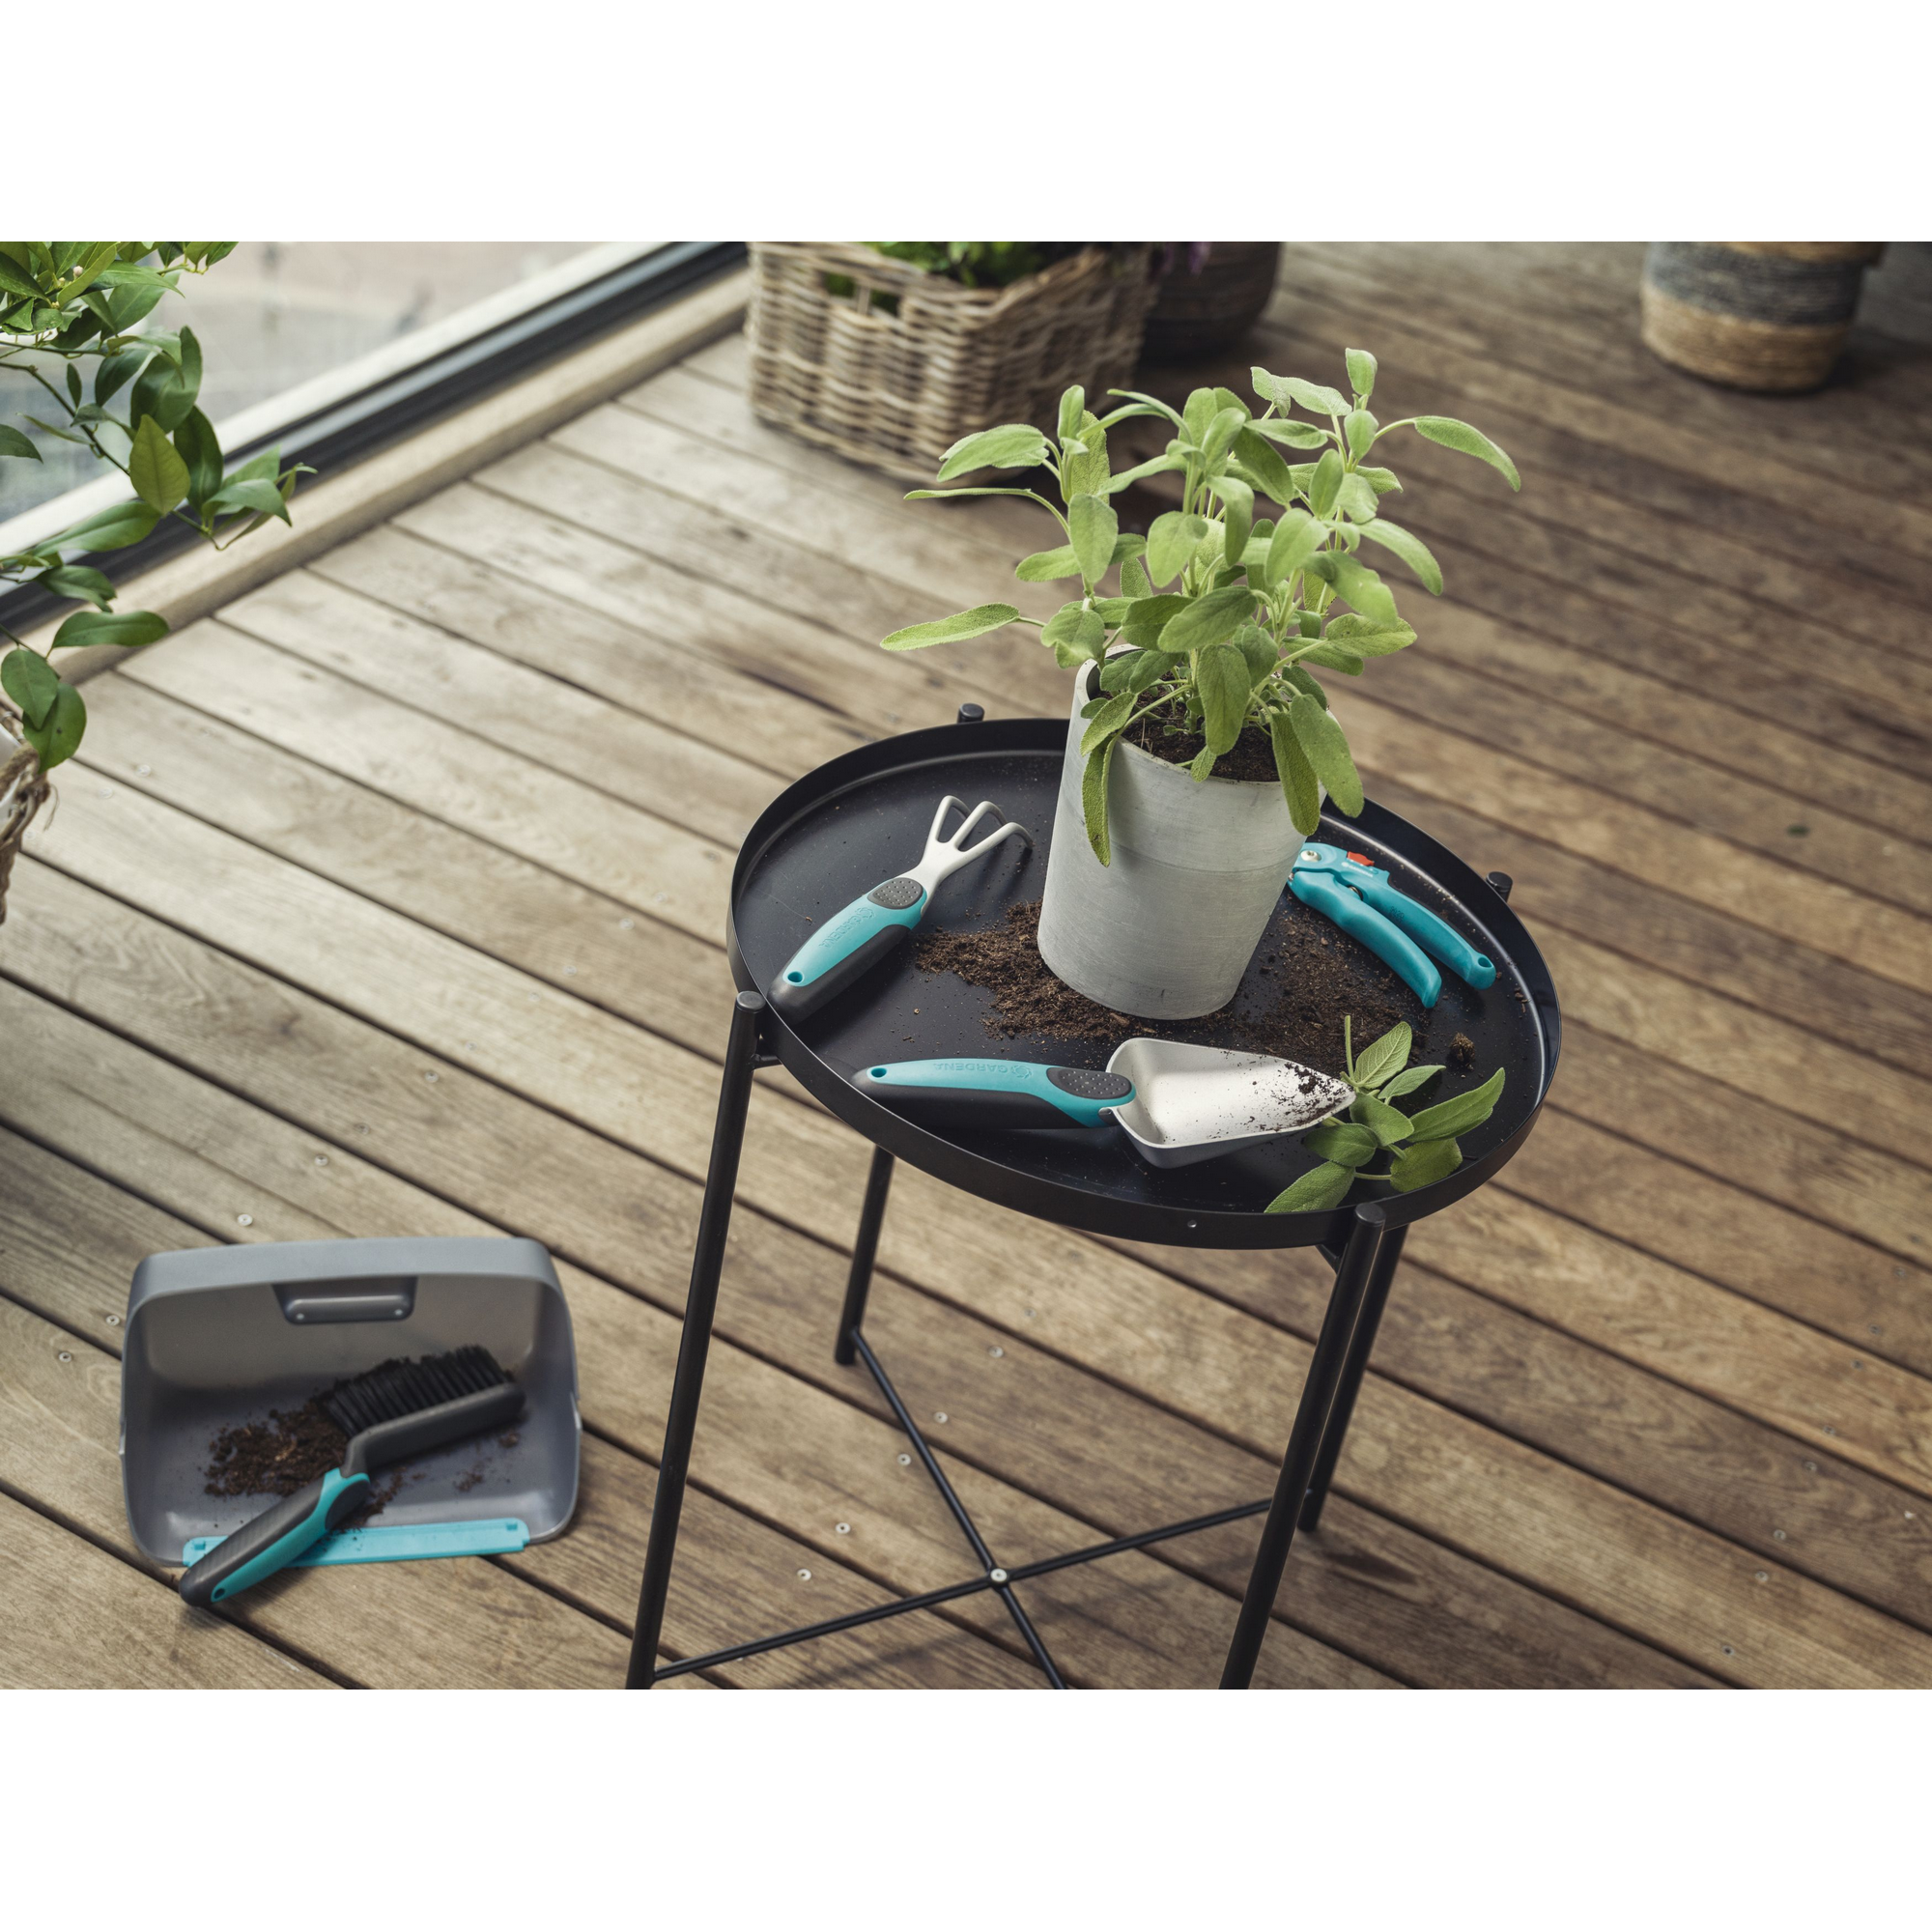 Gartenpflege-Set 'City Gardening' anthrazit/türkis 4-teilig + product picture